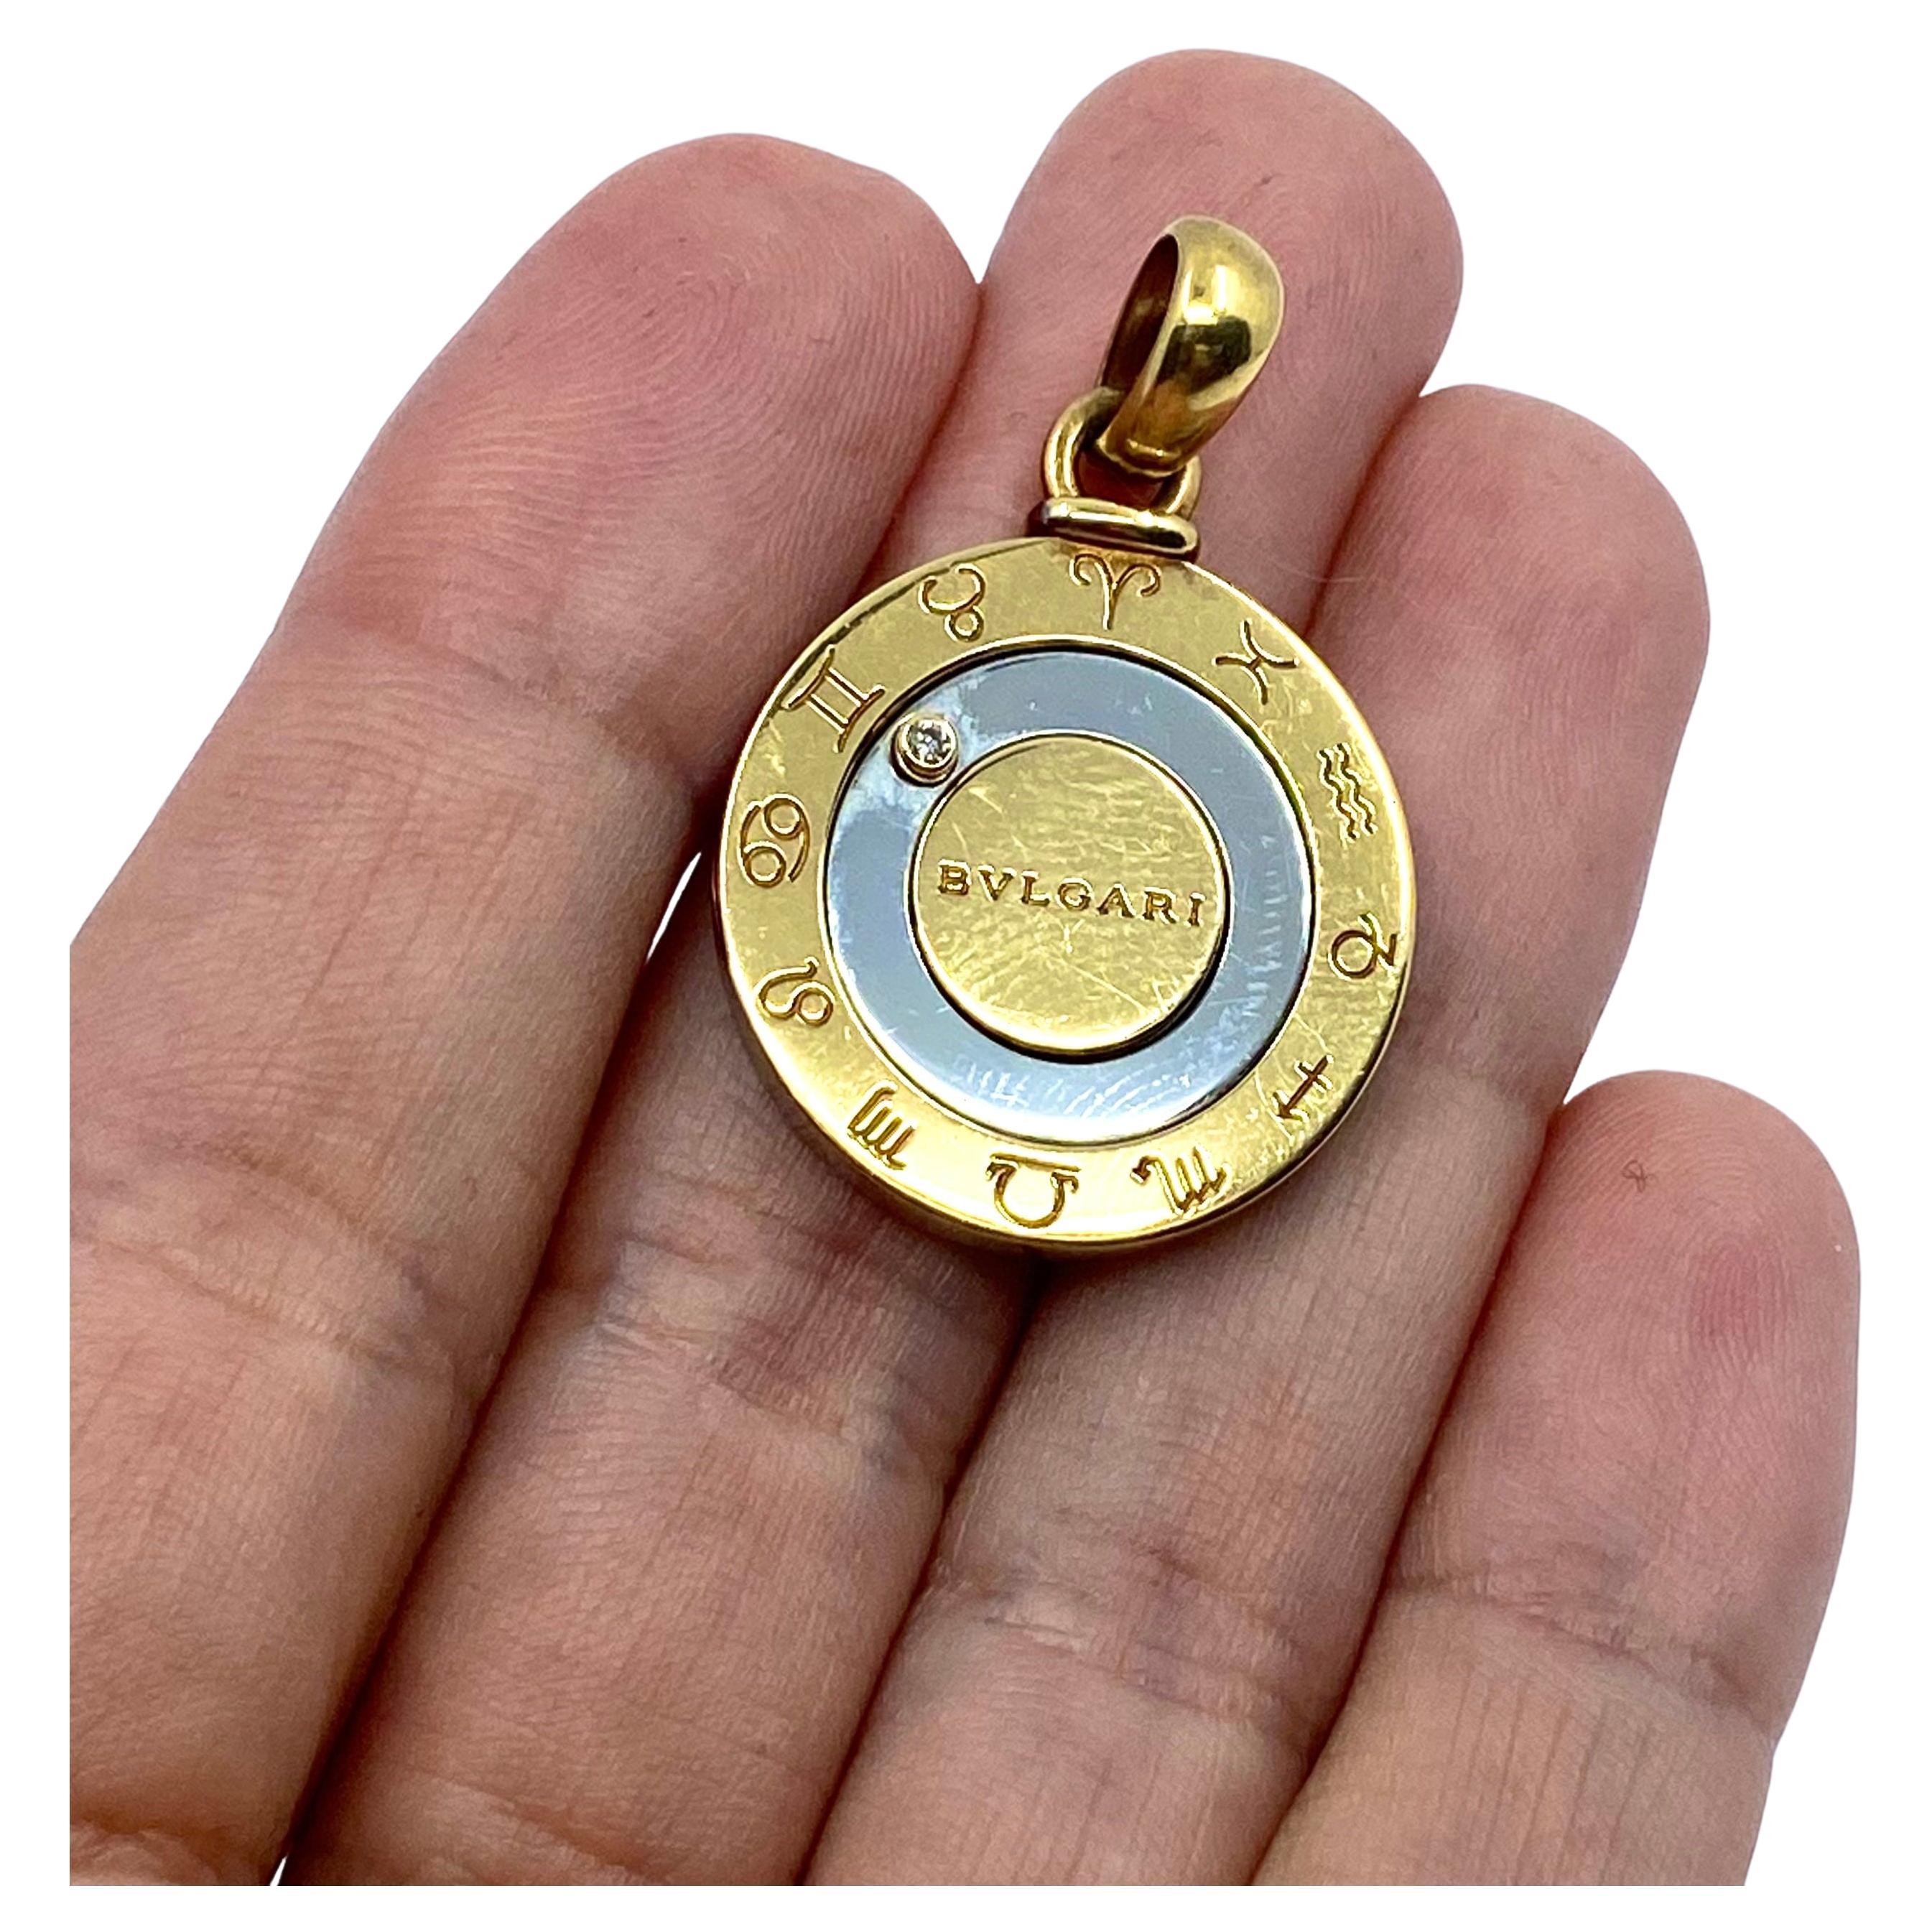 DESIGNER: Bulgari
CIRCA: 2000s
MATERIALS: 18k  Gold
GEMSTONE: Round Brilliant Cut Diamond
WEIGHT: 10.9 grams
MEASUREMENTS:  Diameter -  7/8”
HALLMARKS: Bvlgari, 750, Made in France, Steel and Gold

A Bulgari Horoscope charm pendant, made of 18k gold